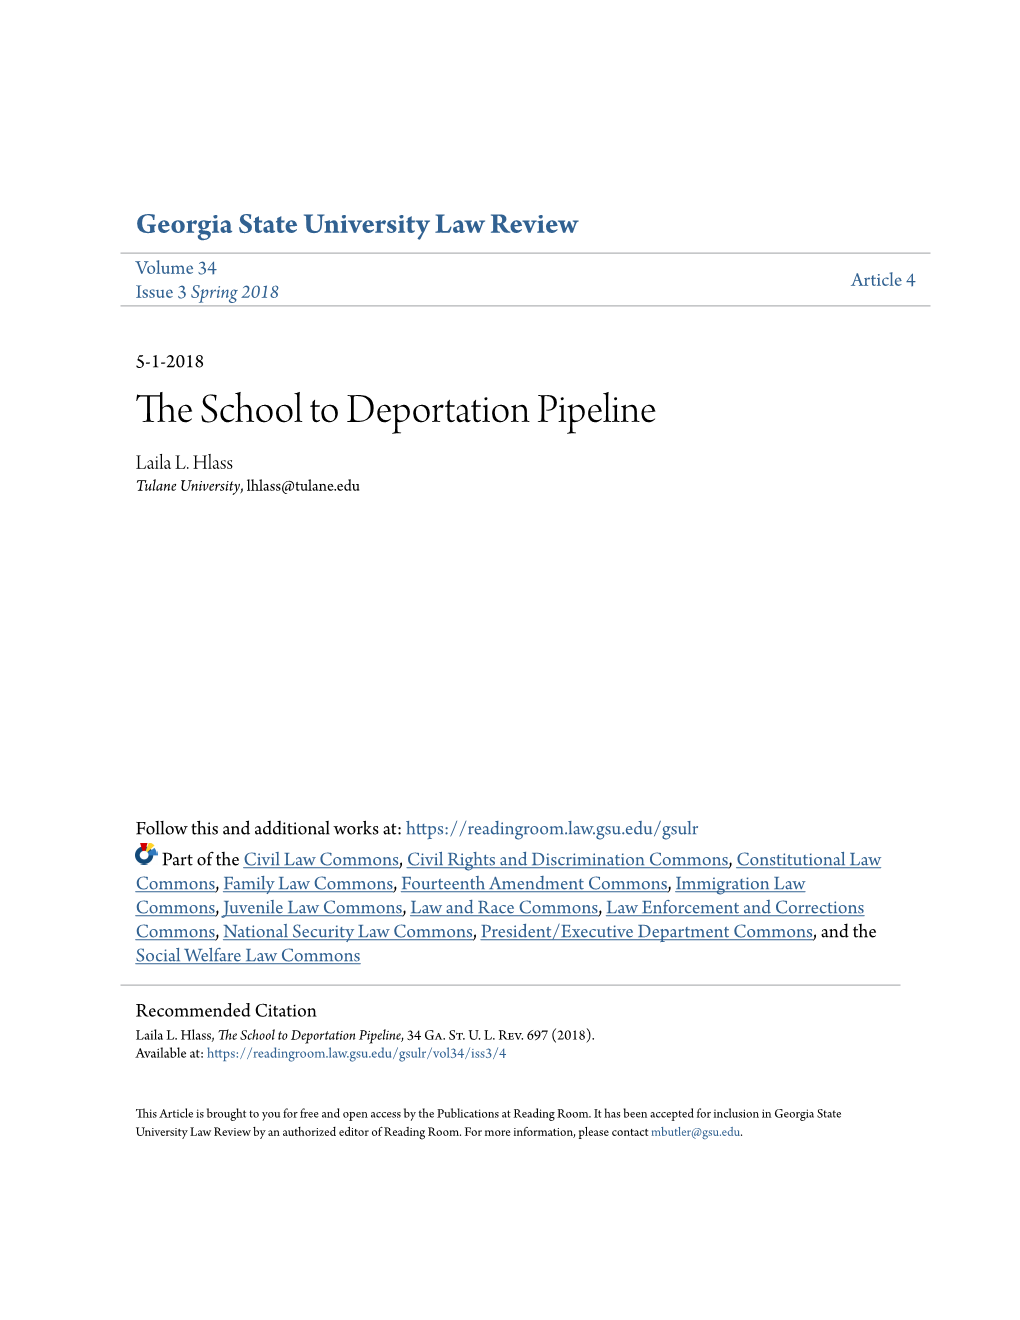 The School to Deportation Pipeline, 34 Ga